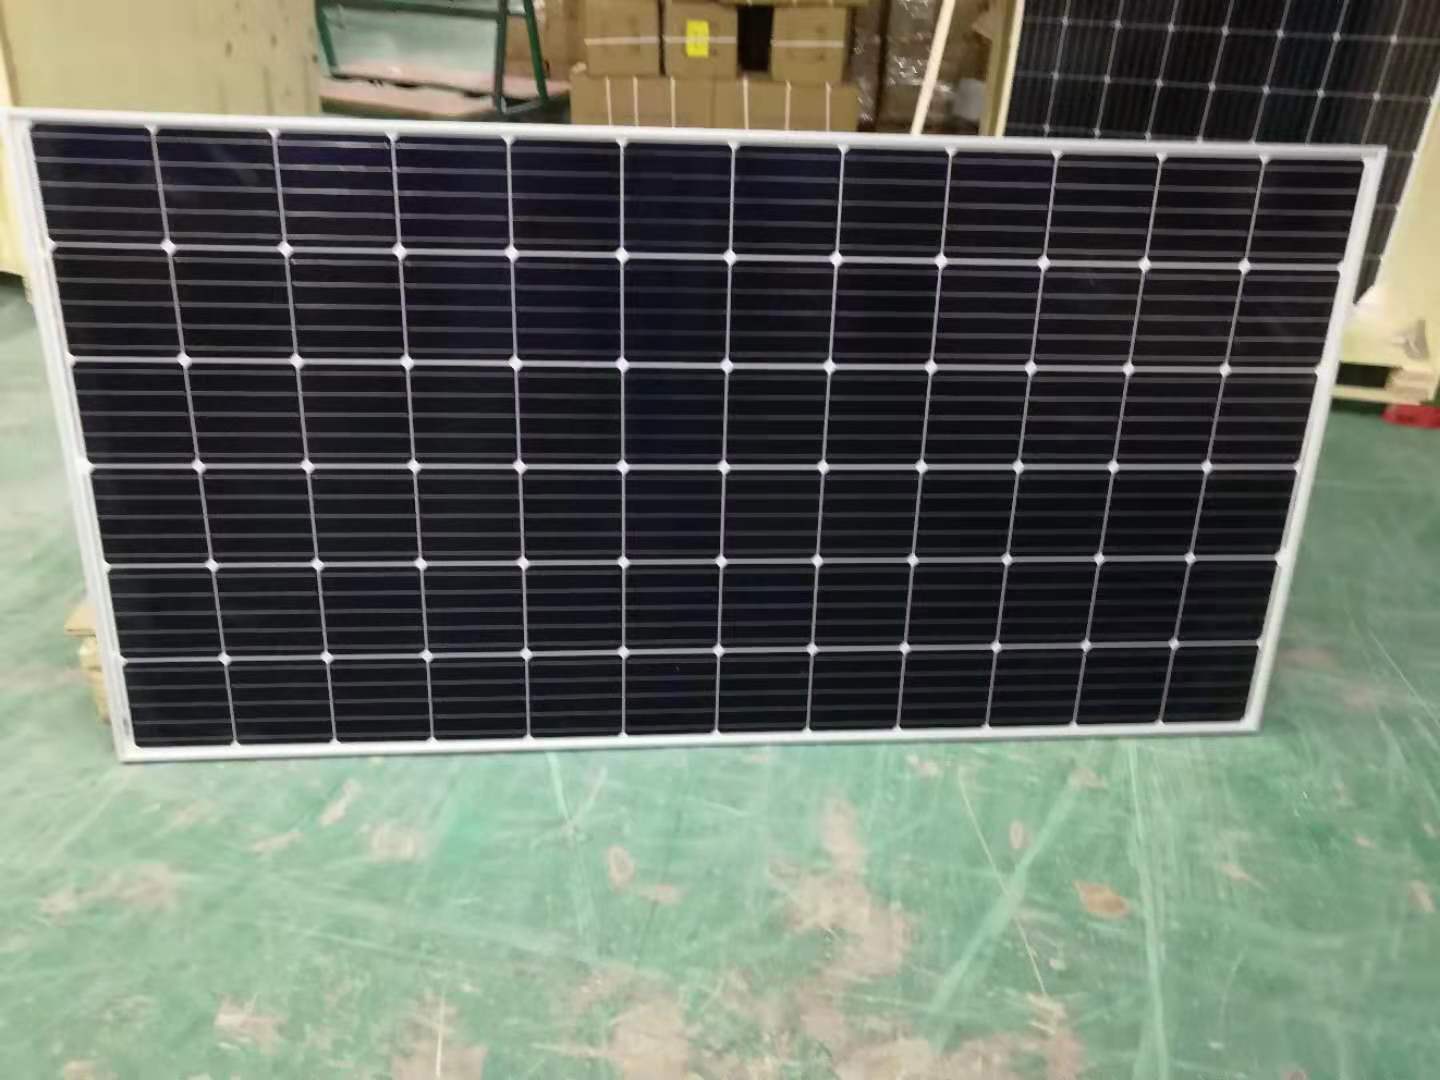 JA 72cells 385w mono solar panel